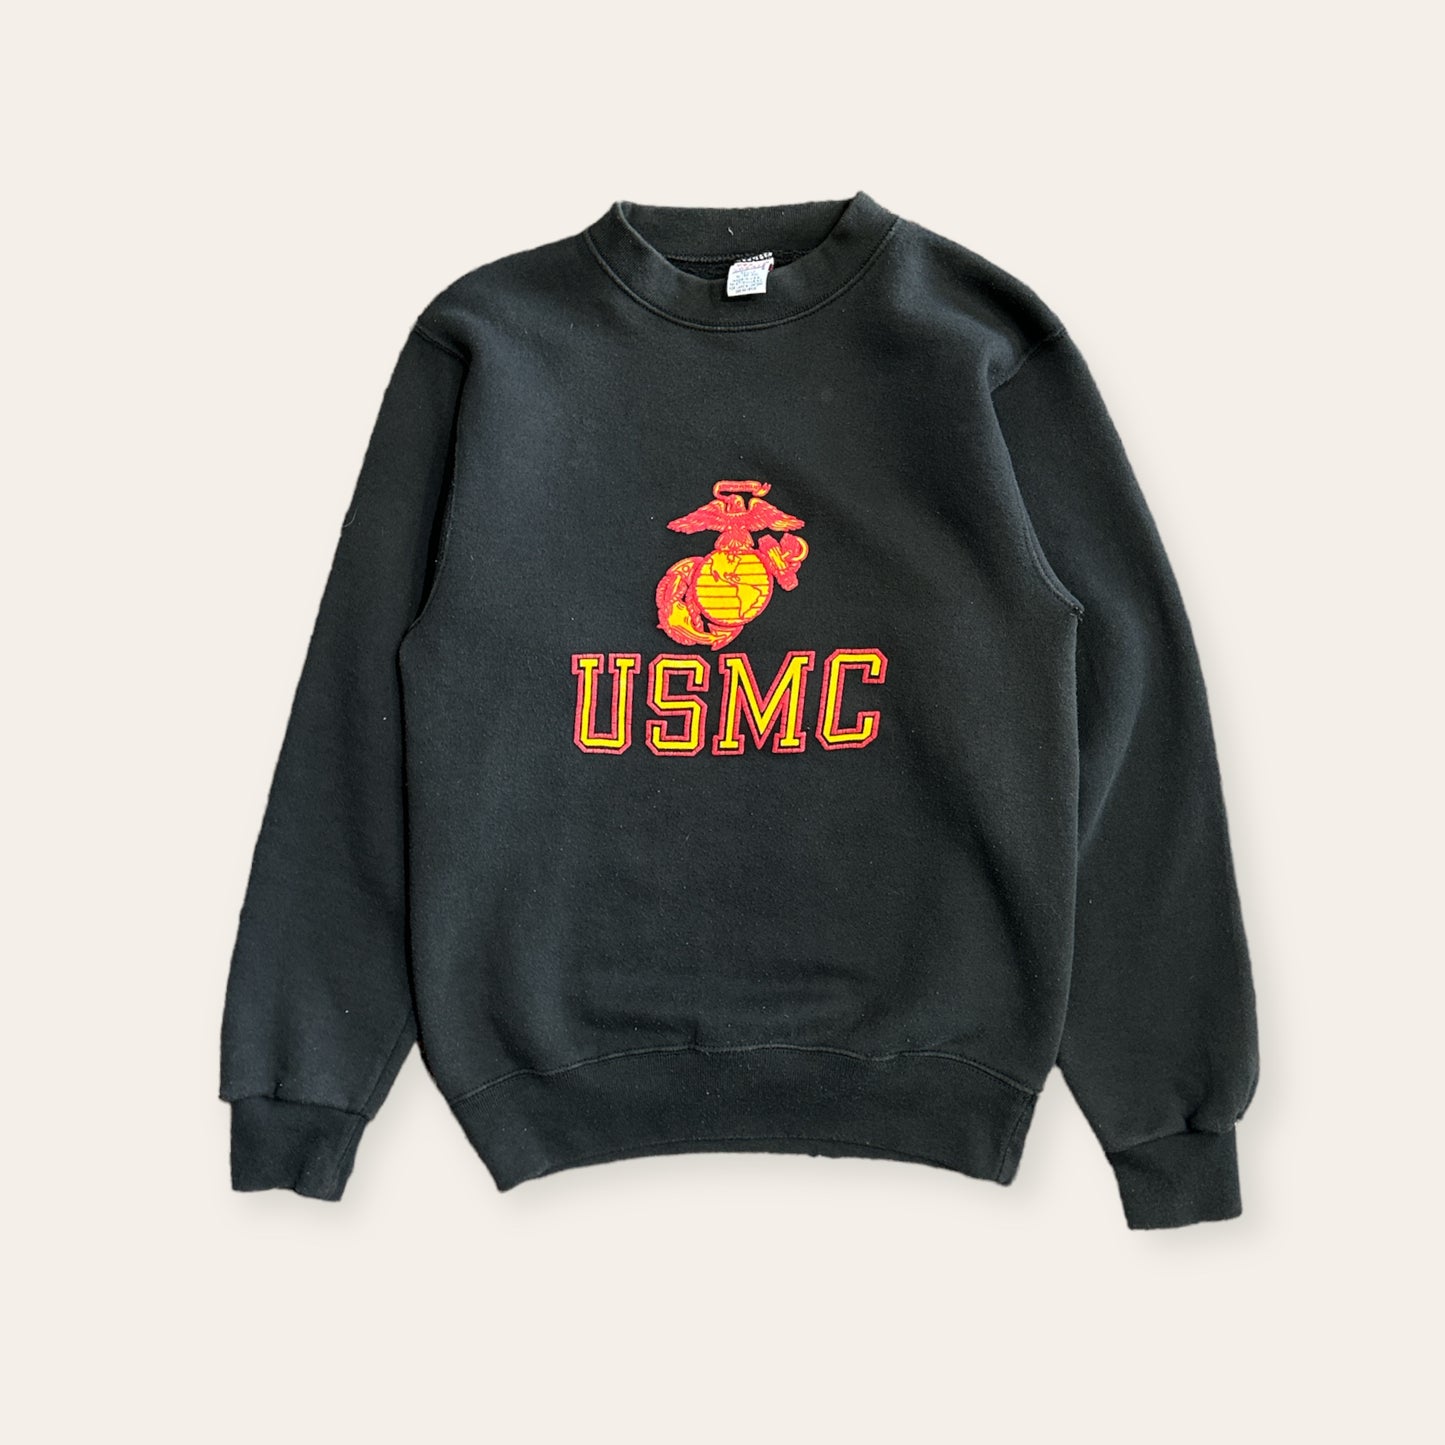 90s USMC Sweater Size M